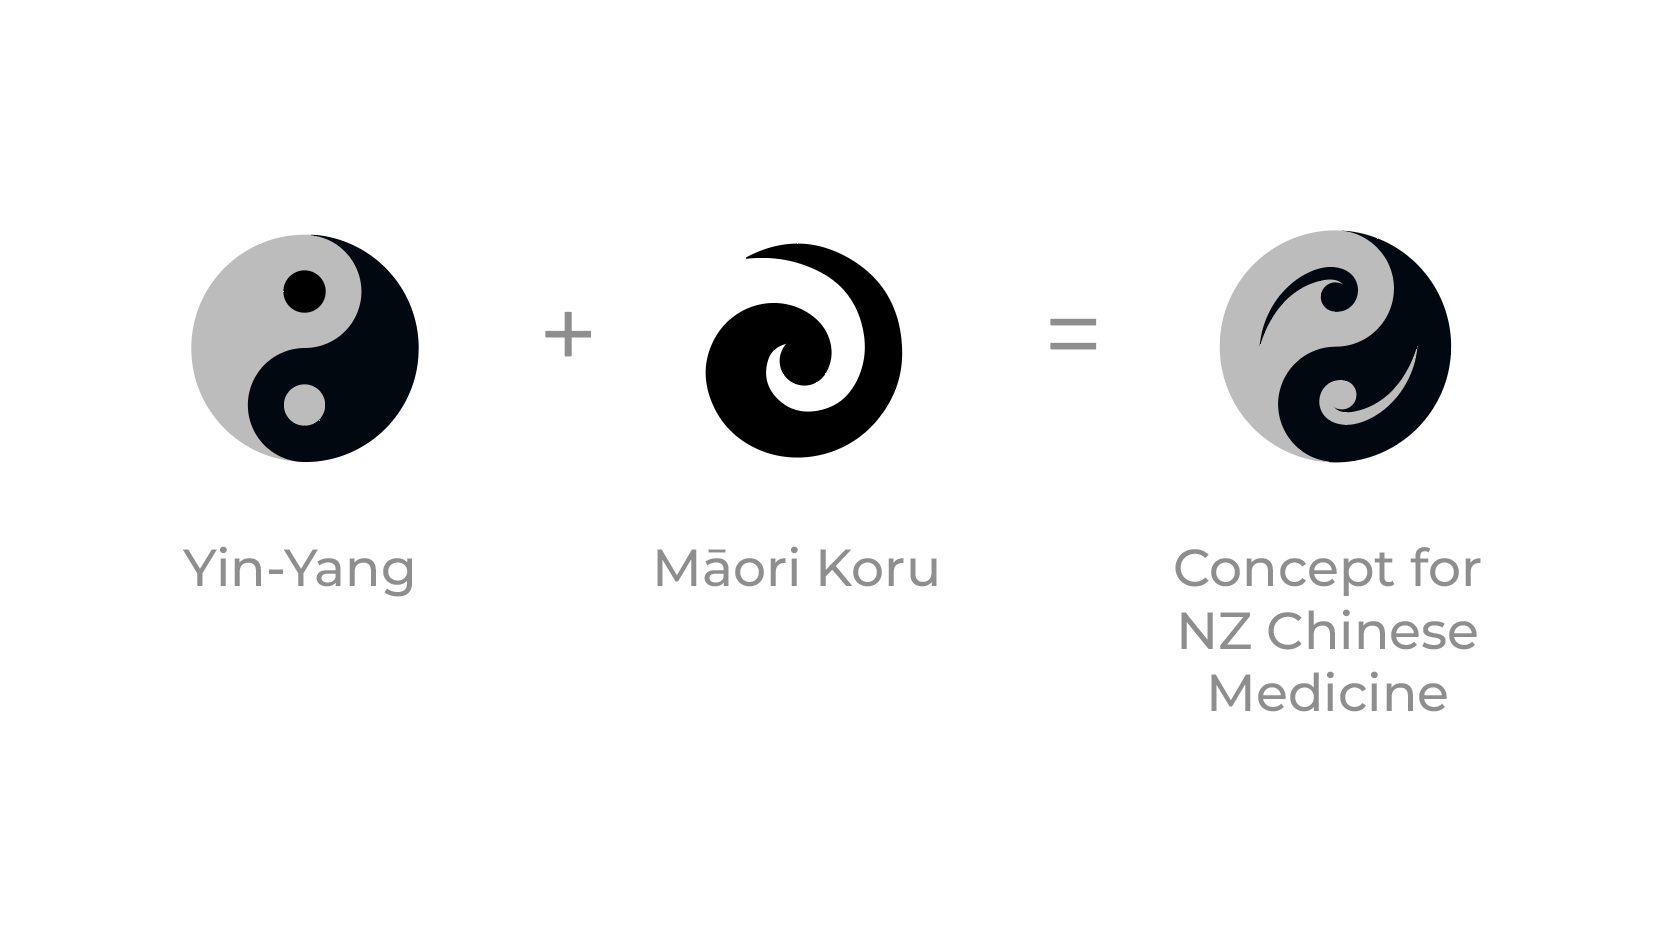 Chinese Medicine Council of New Zealand, a brand that integrates Māoru koru and Yingyang